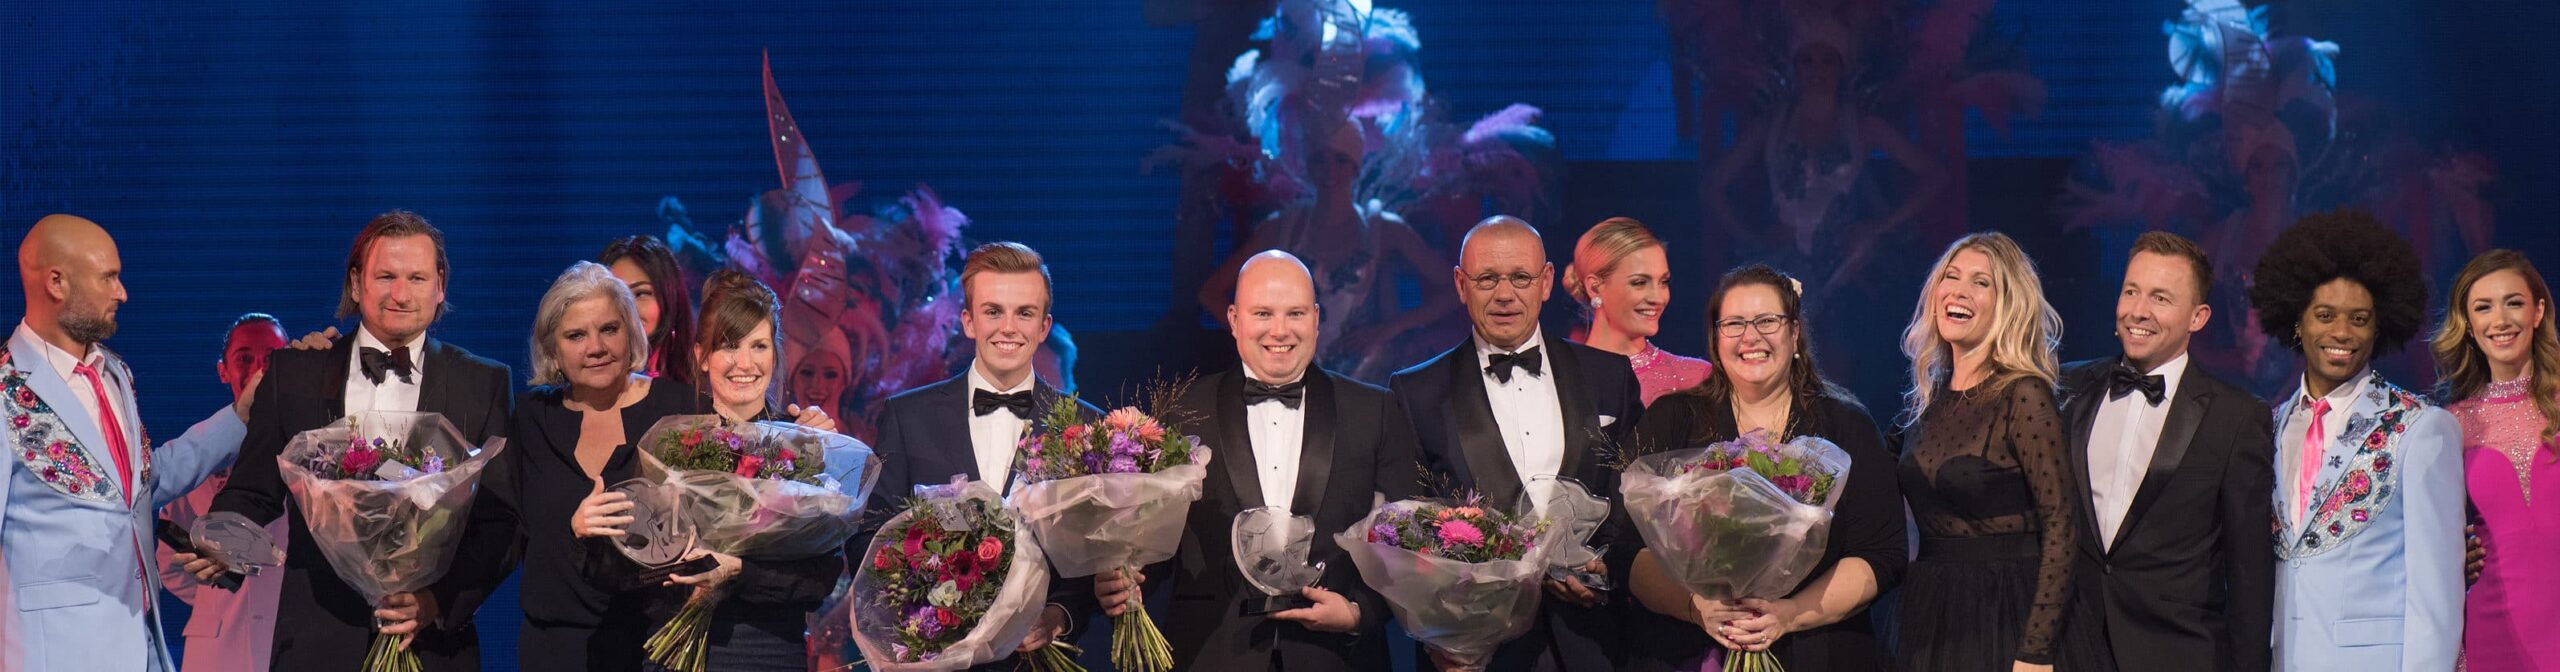 Winnaars Dutch Pet Awards 2017